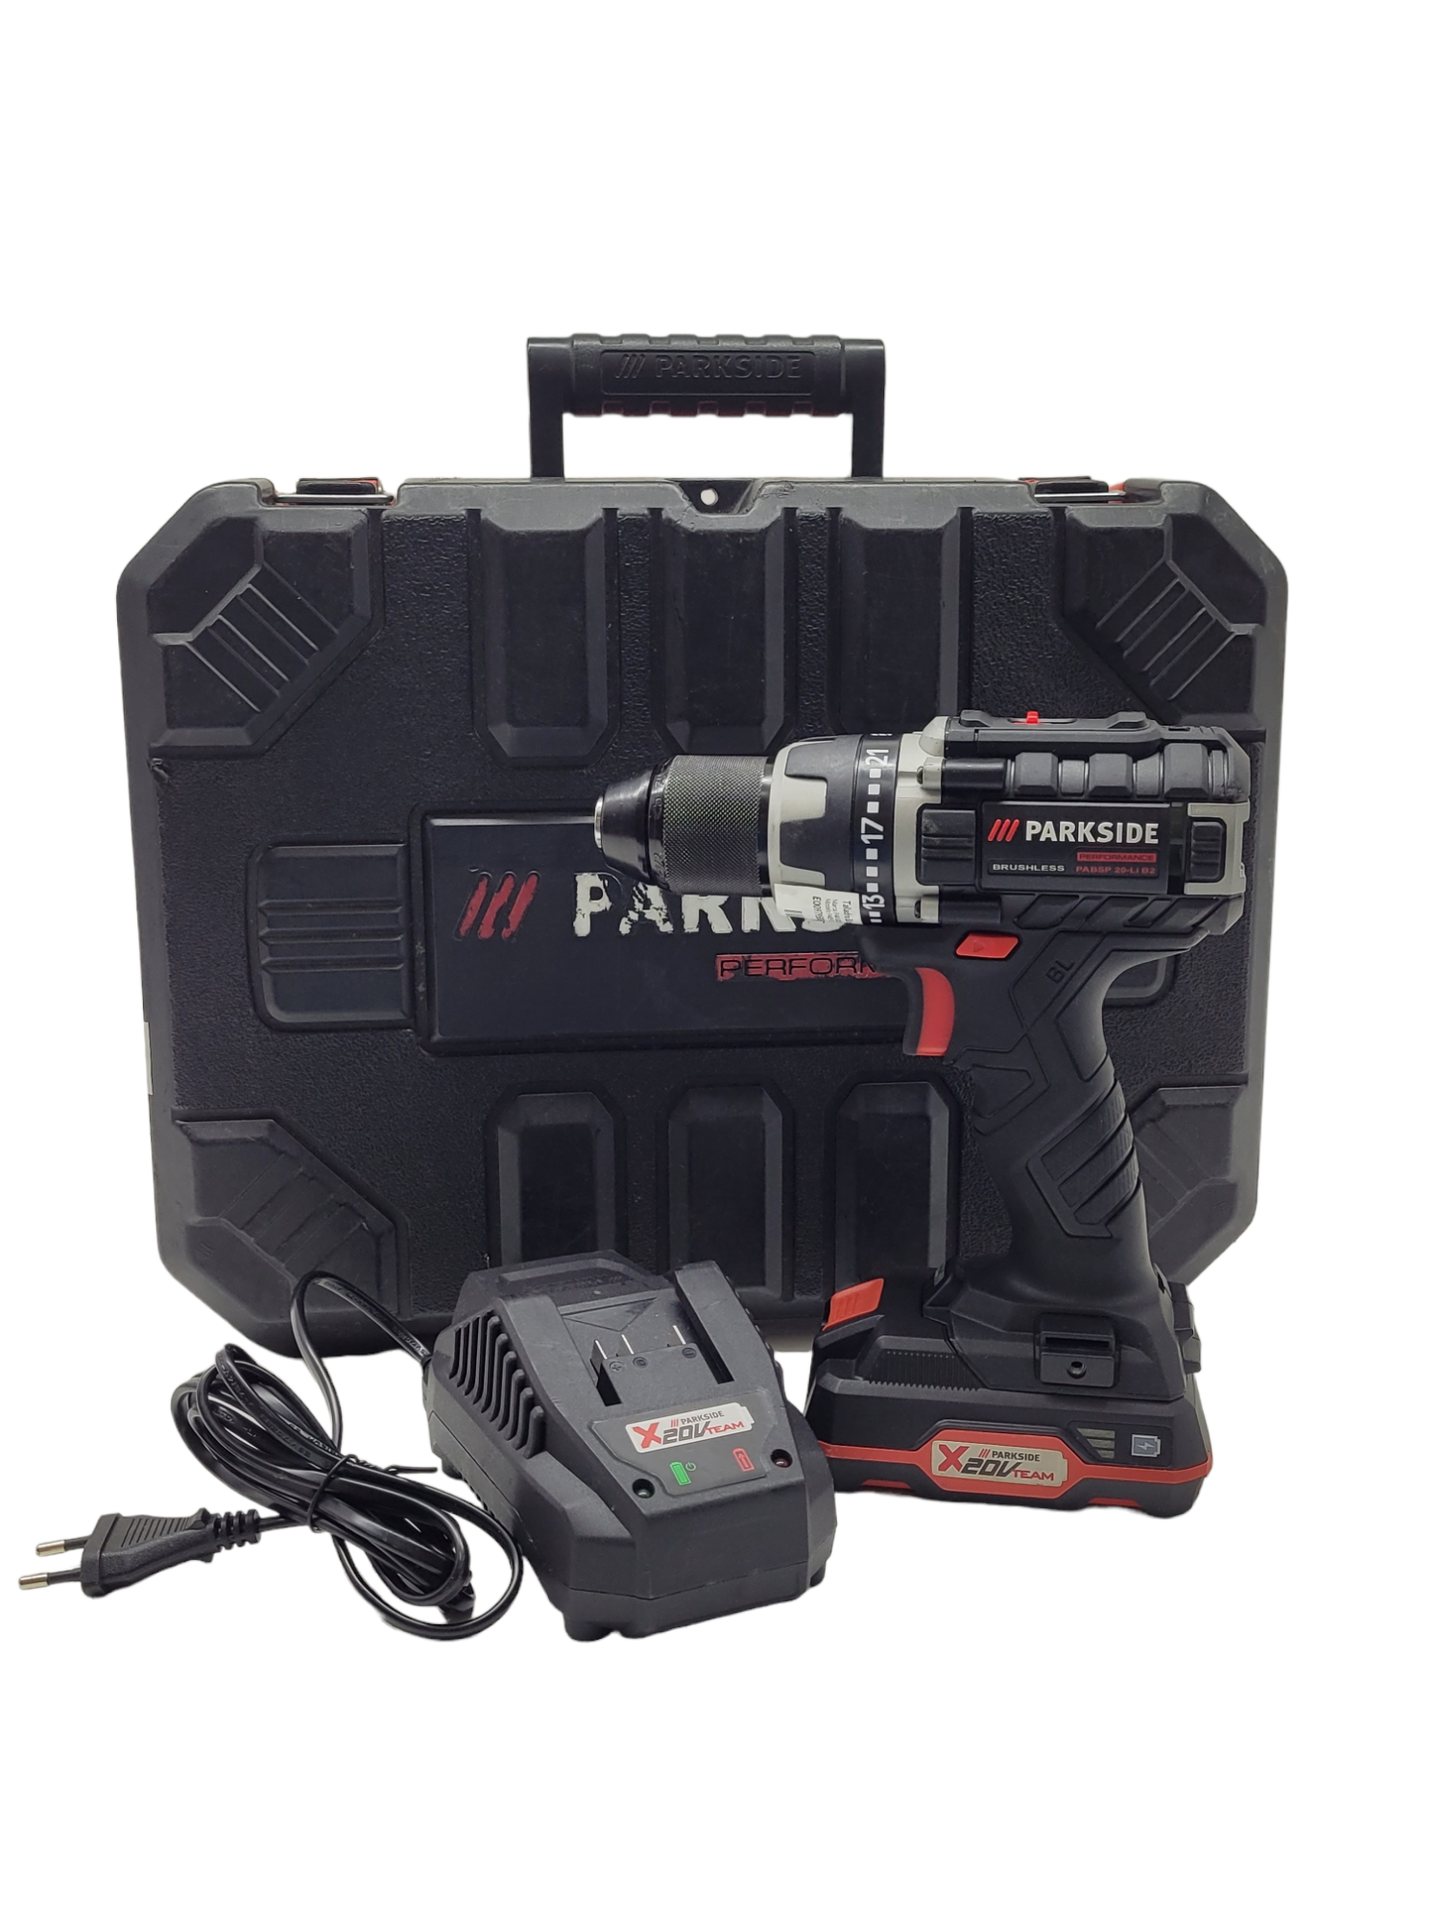 Taladro percutor a batería Parkside PABSP 20- Li X20V, sin escobillas, 2  velocidades, LED (en maletín de transporte, sin batería ni cargador)